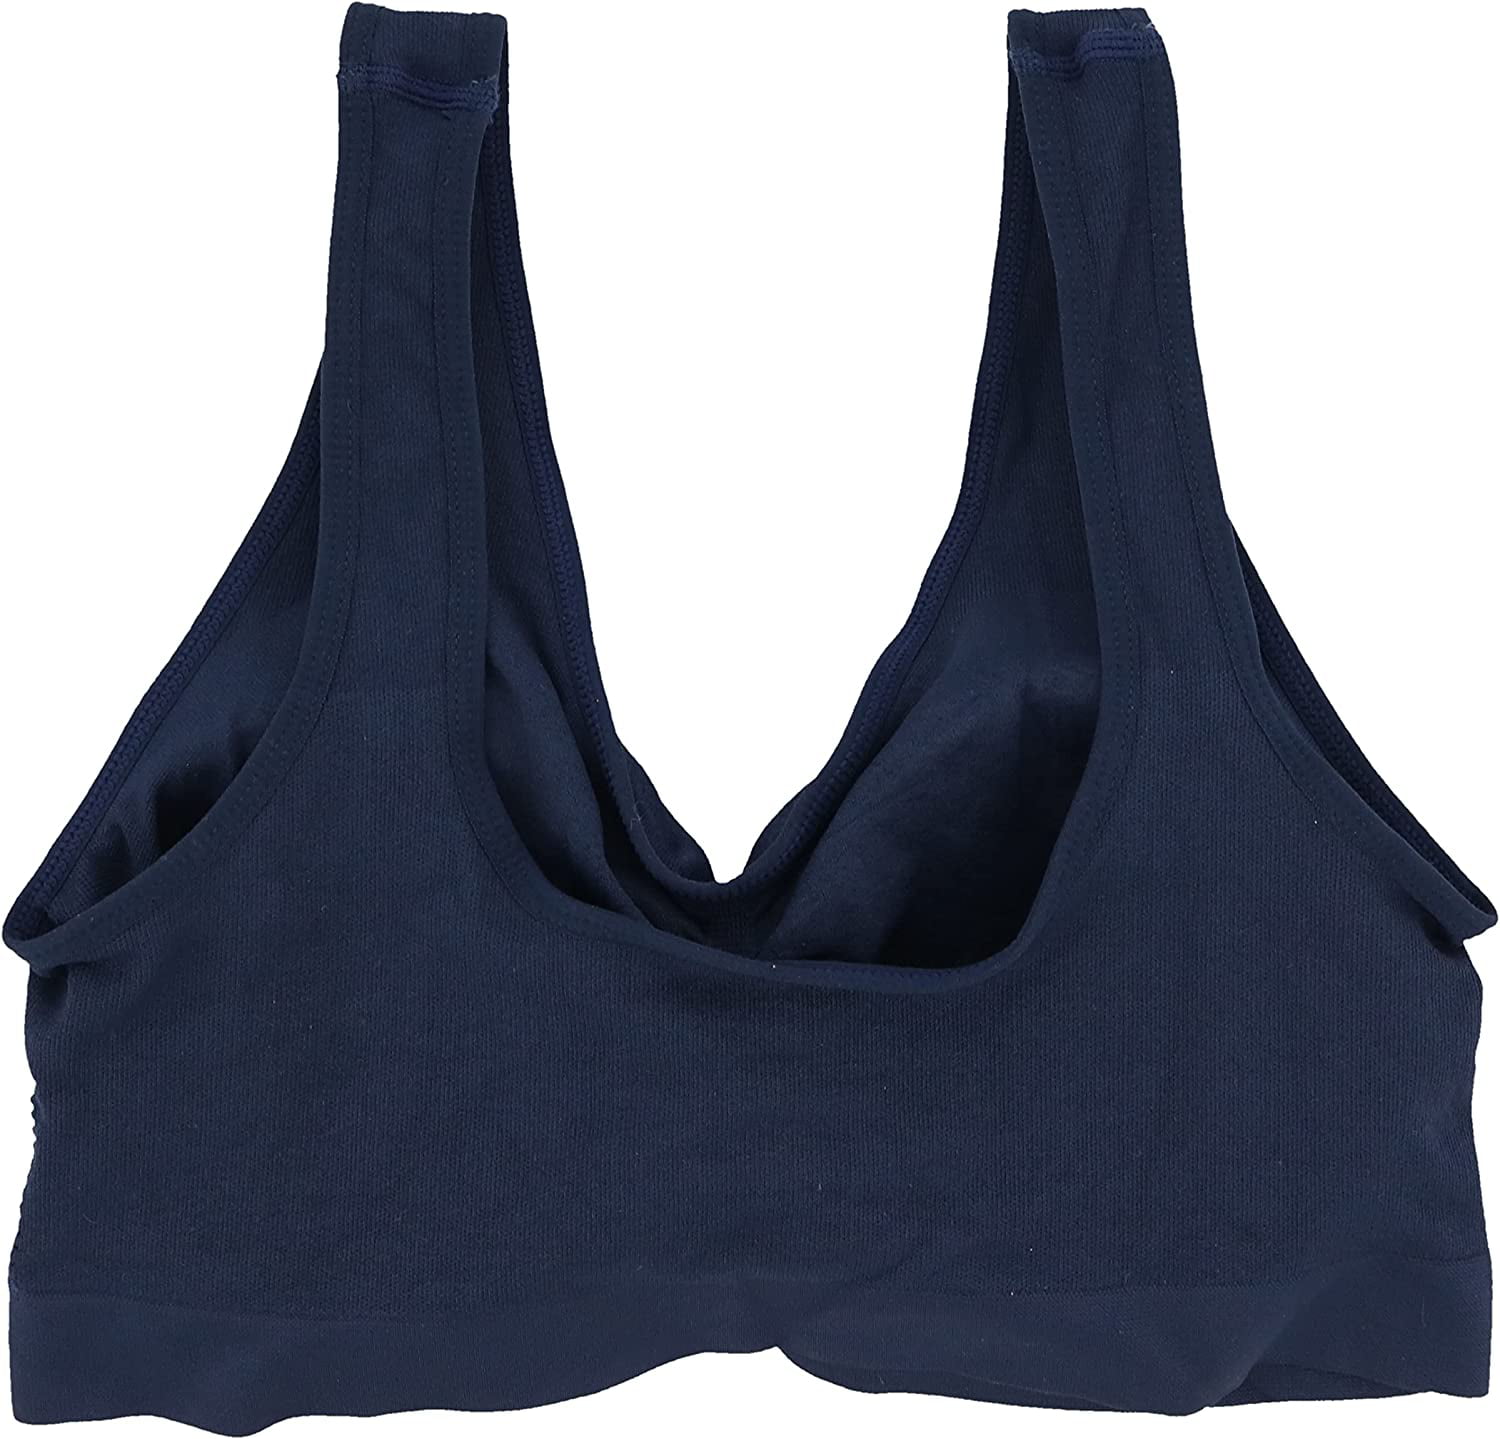 Delta Burke Intimates Women's Plus-Size Seamless Comfort Bra - 3 Pack -  Grey, Pink, & Navy - 2X 